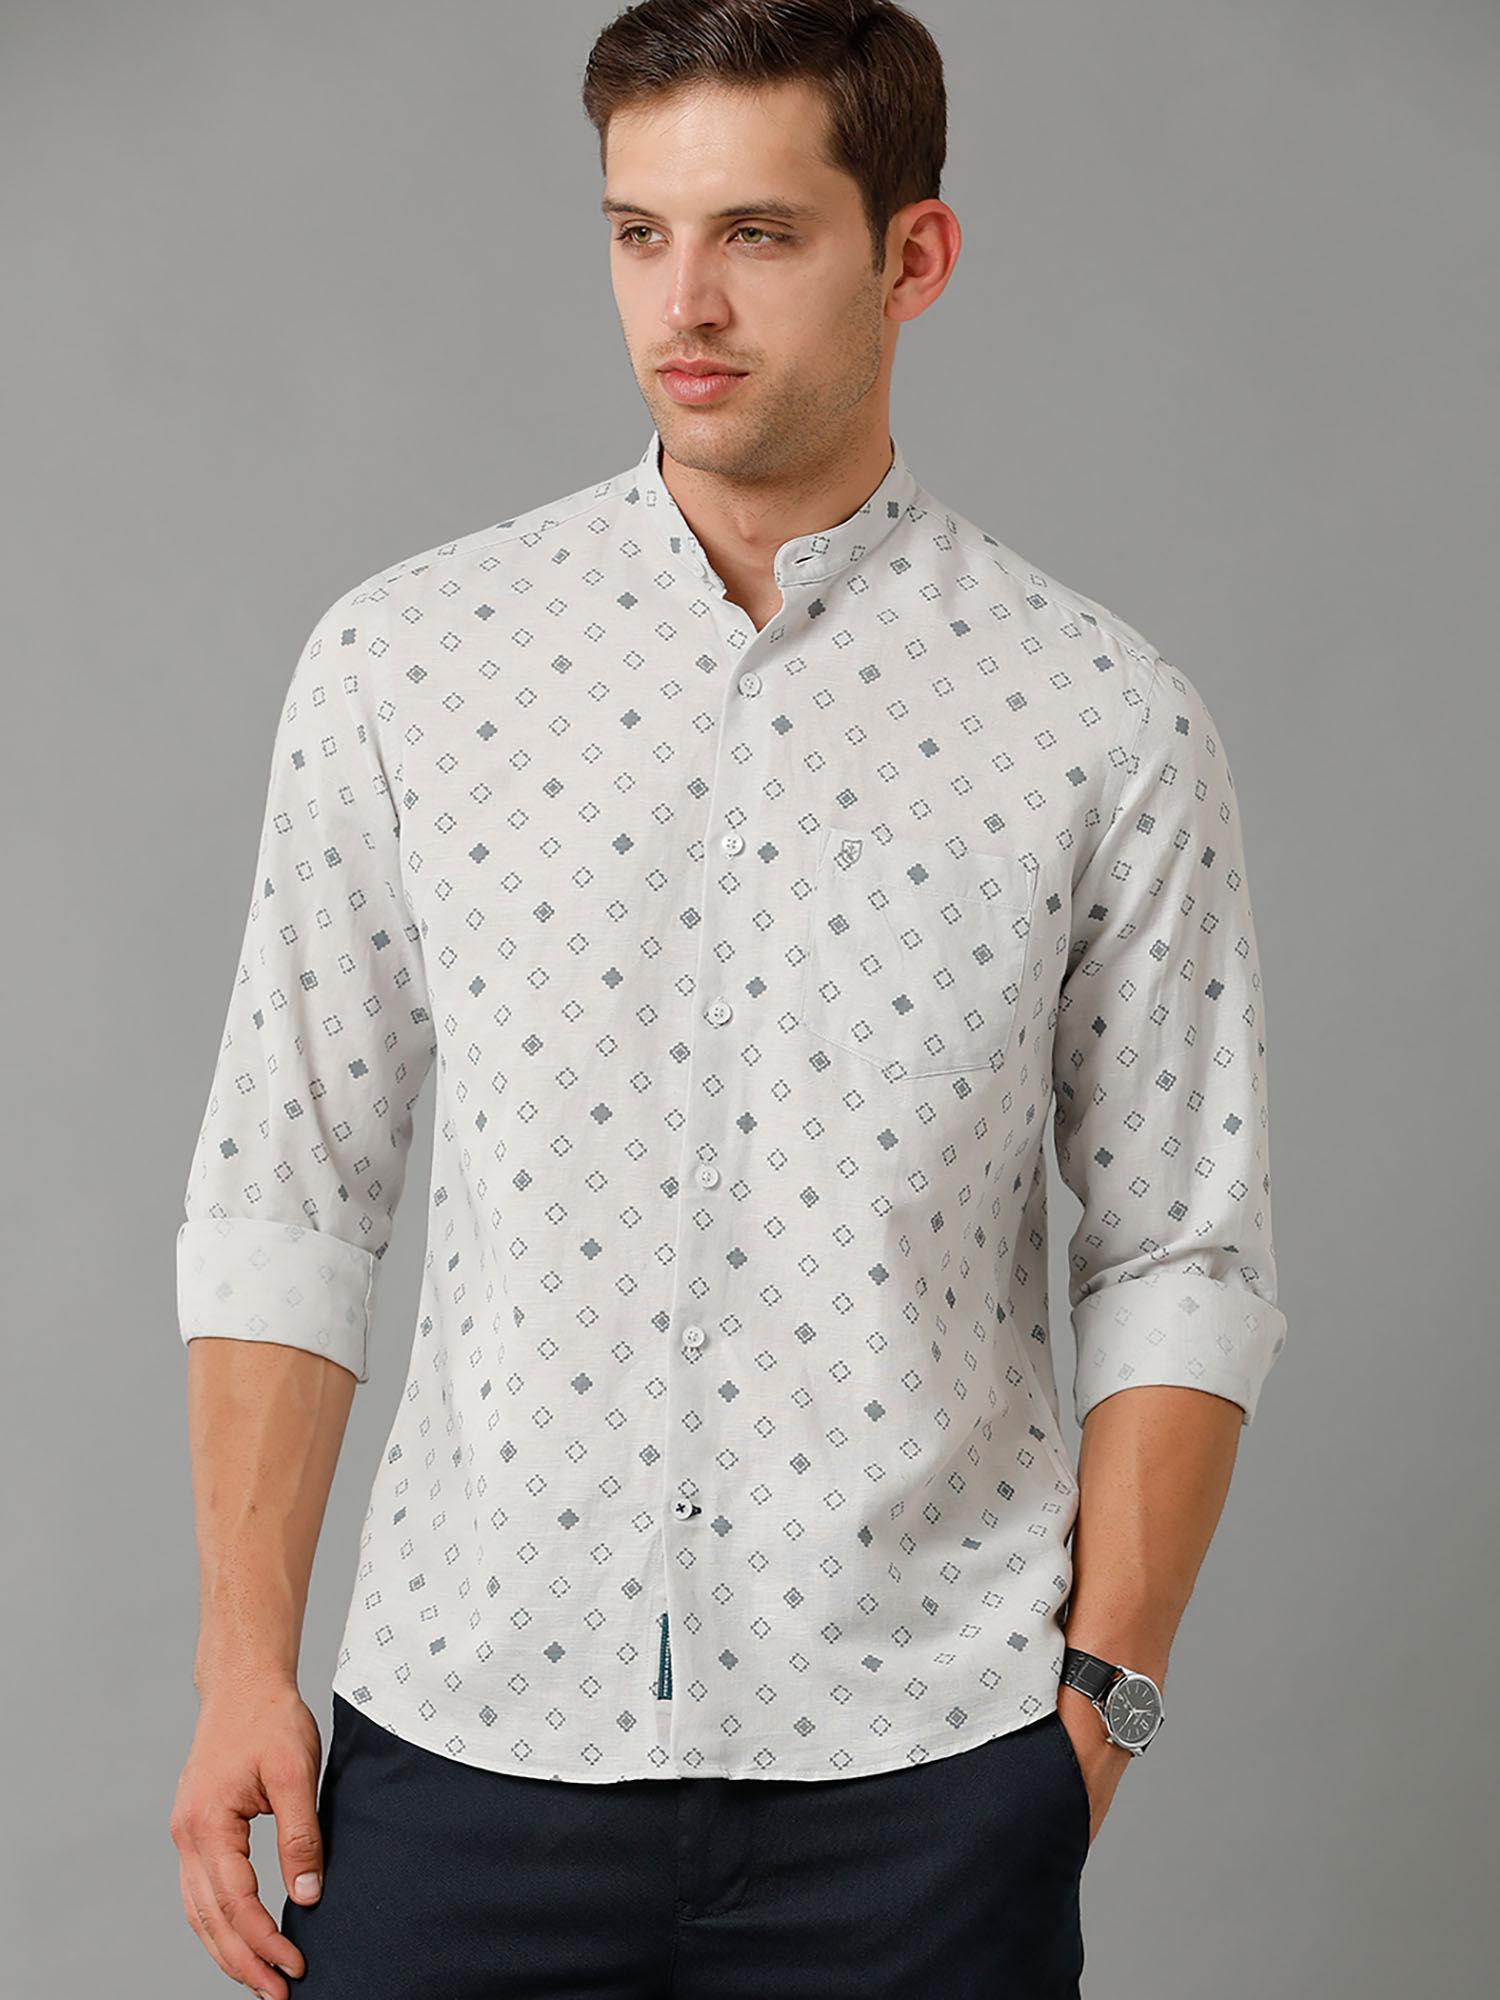 men's pure linen grey printed regular fit full sleeve casual shirt